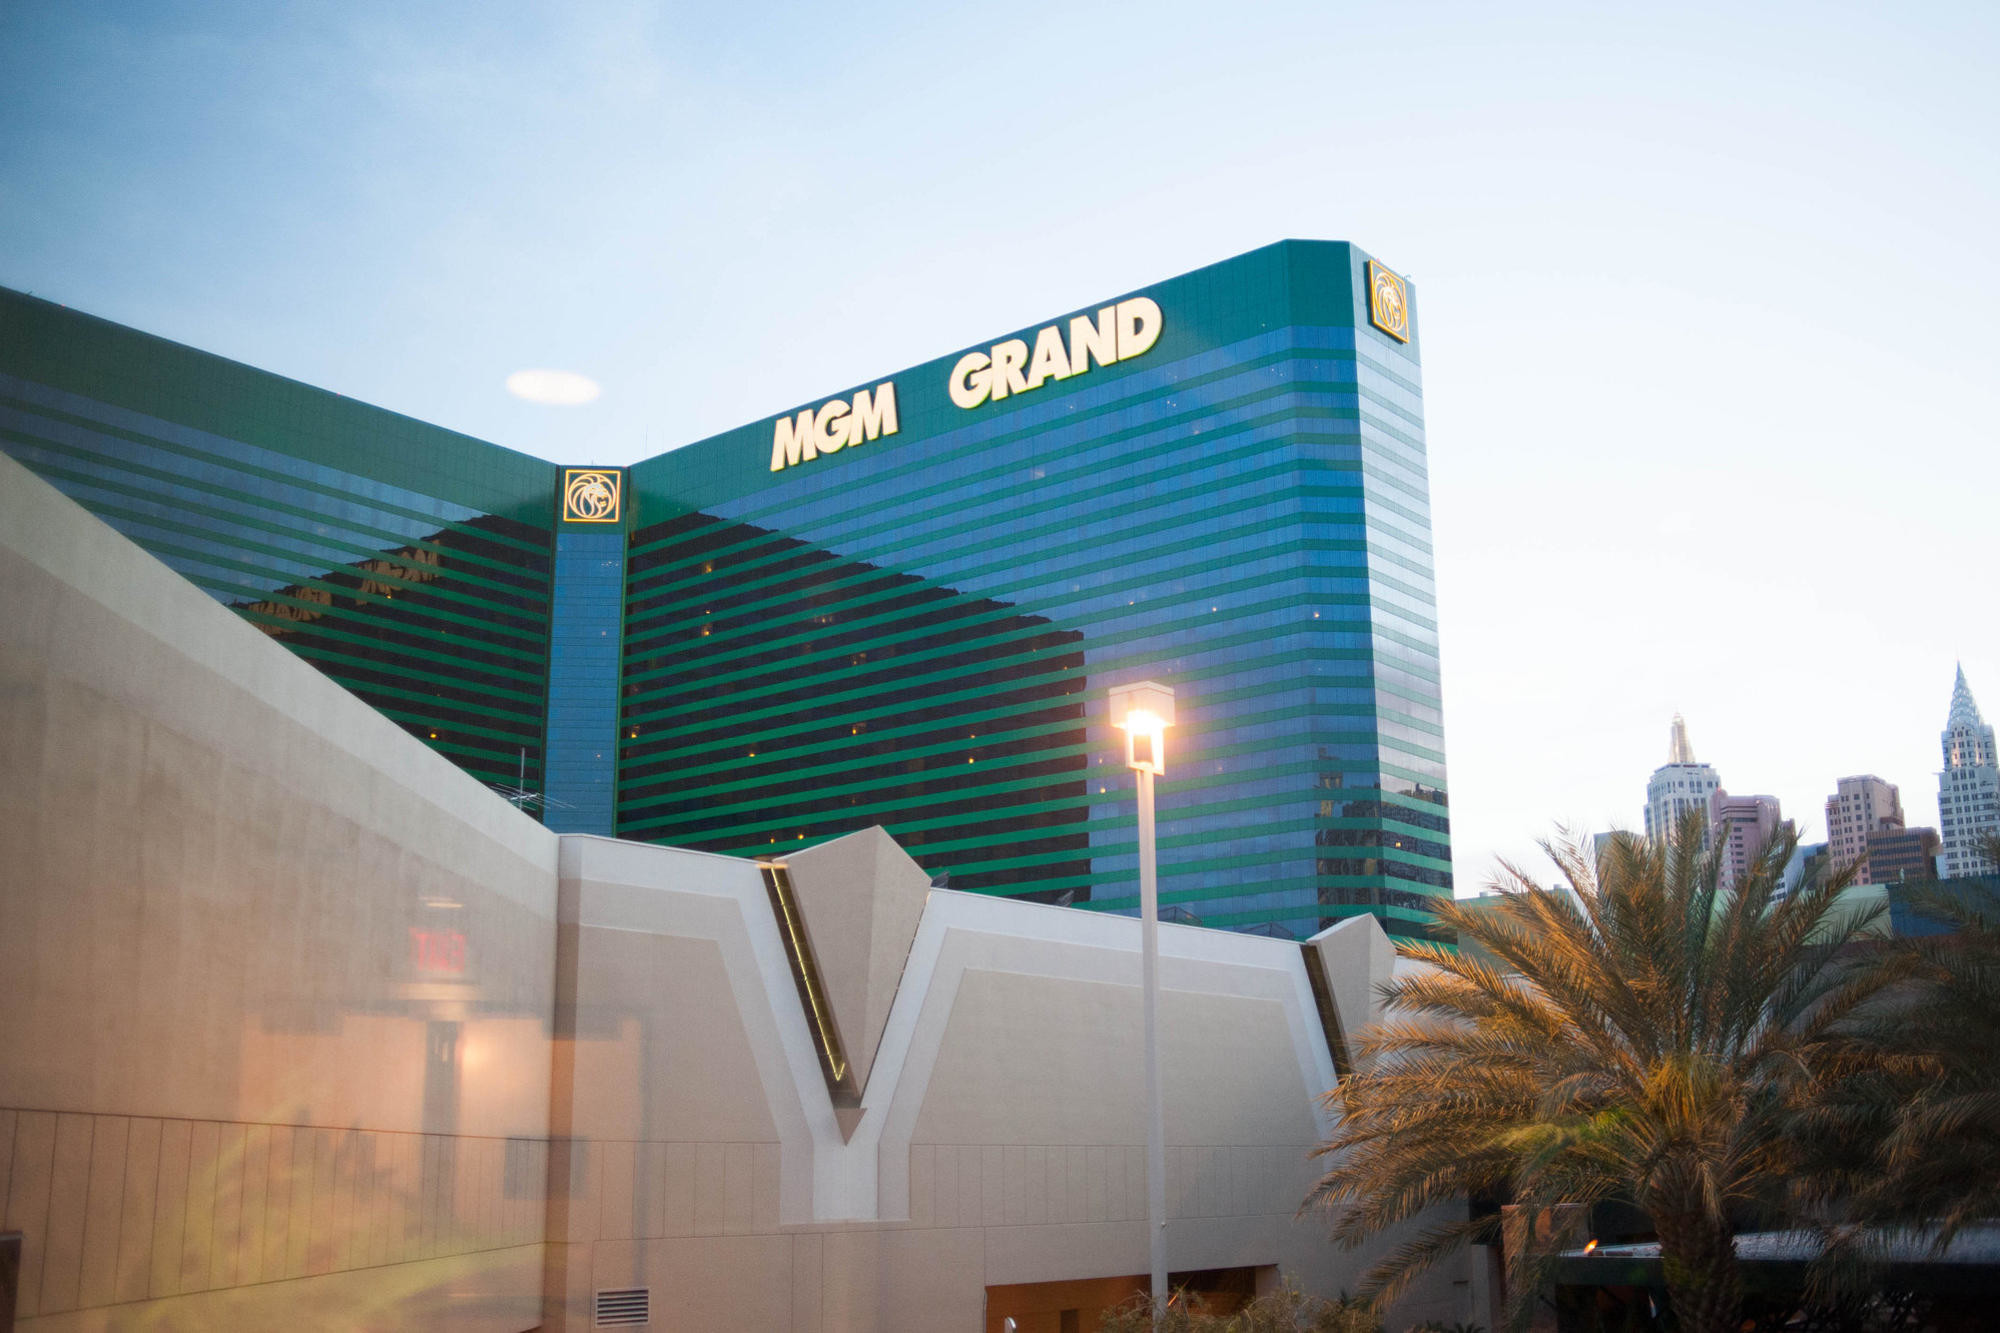 MGM Grand Hotel exterior